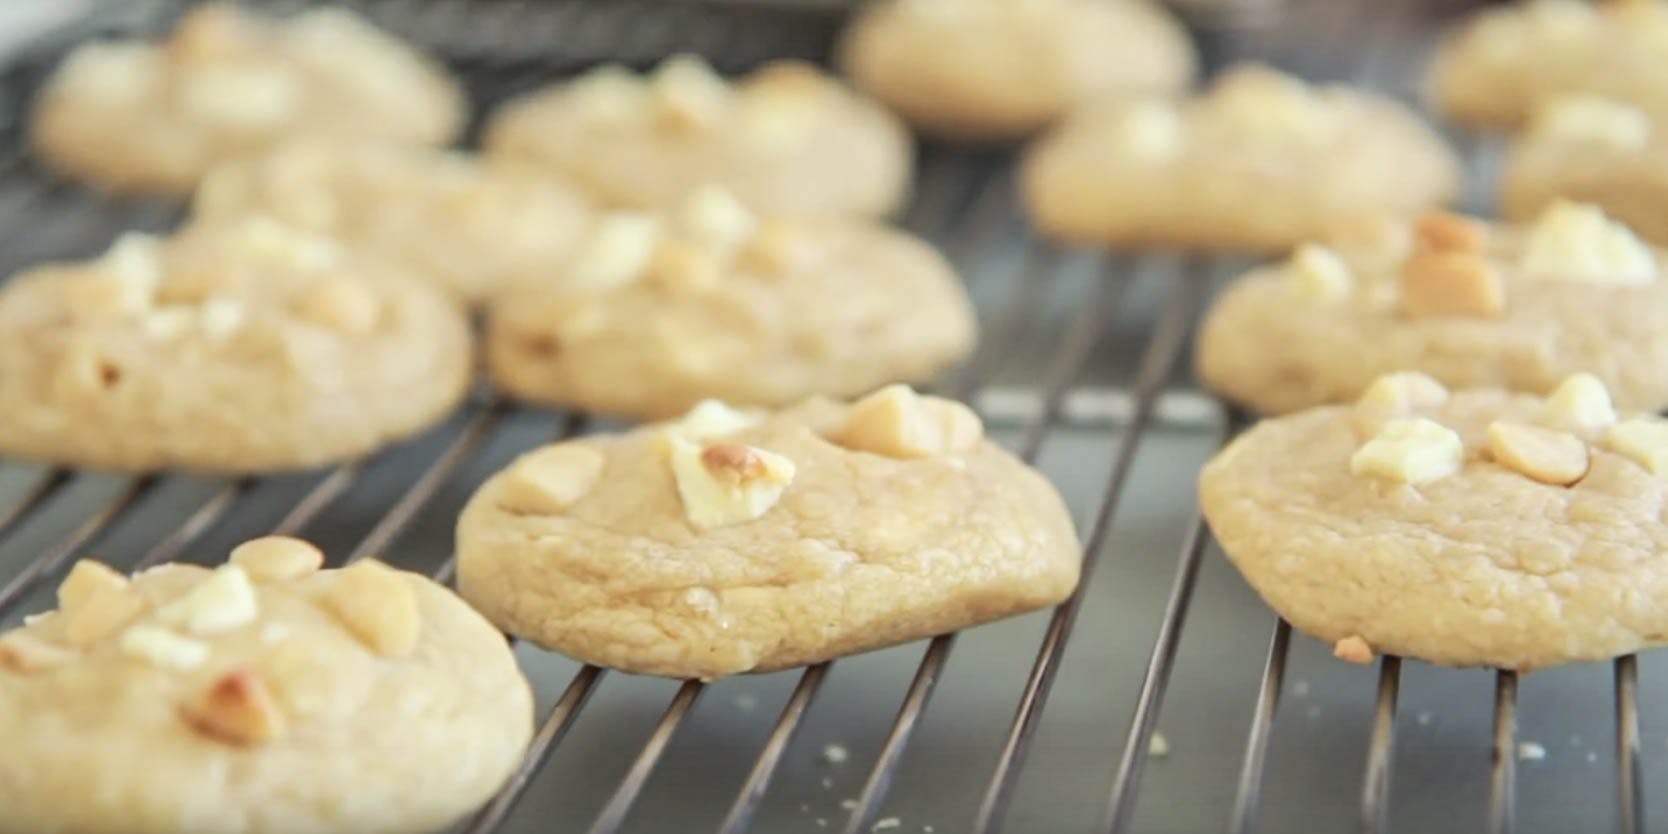 How to Make Cannabis-Infused White Chocolate Macadamia Cookies